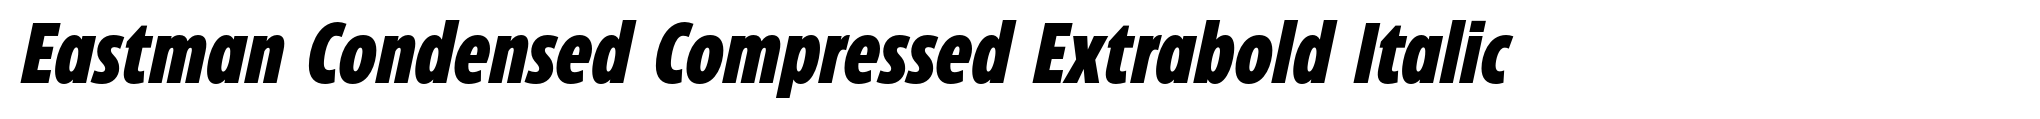 Eastman Condensed Compressed Extrabold Italic image